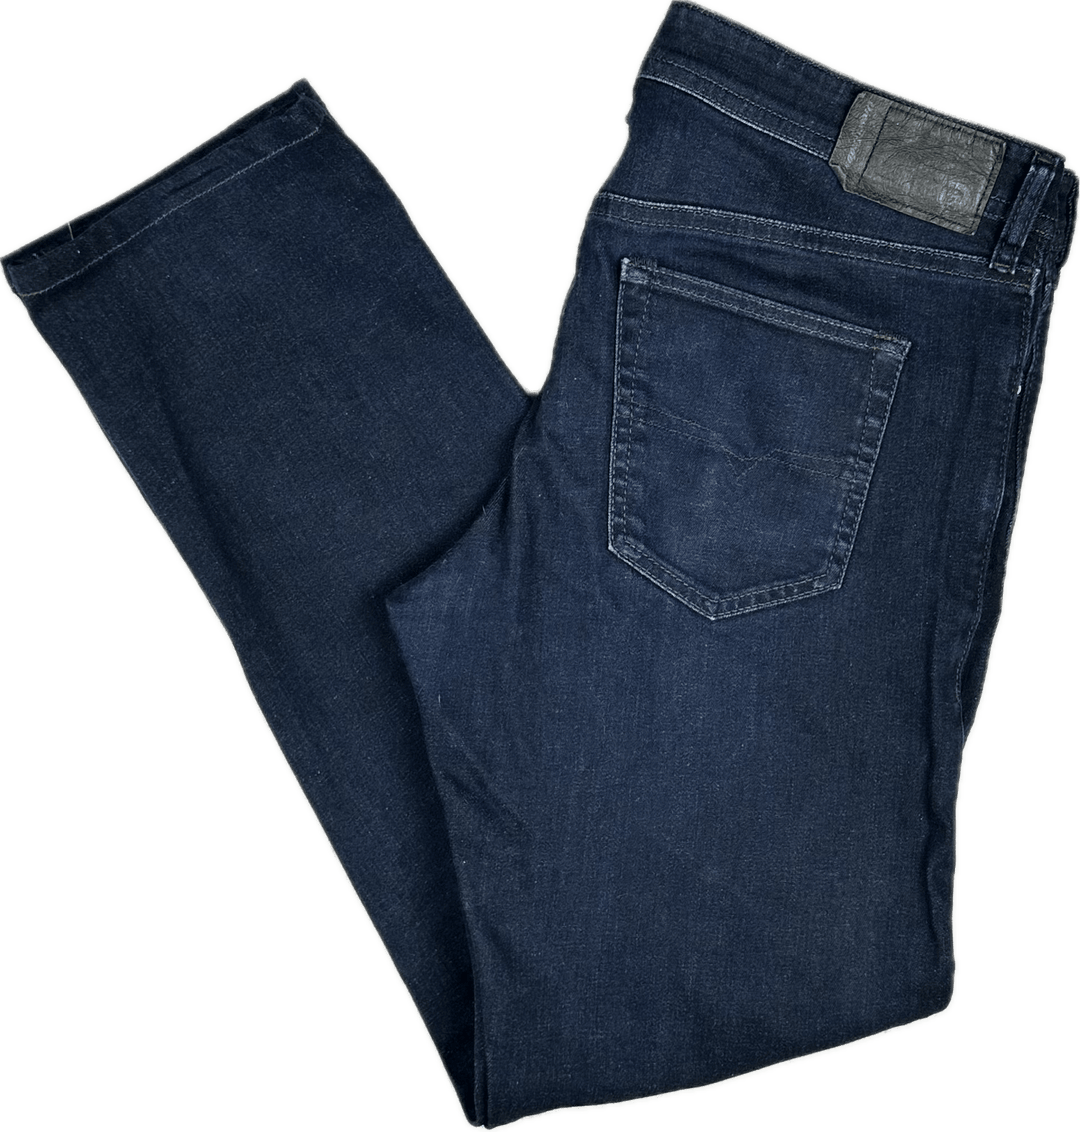 Diesel Mens 'Buster' Regular Slim Tapered Jeans - Size 34/34 - Jean Pool